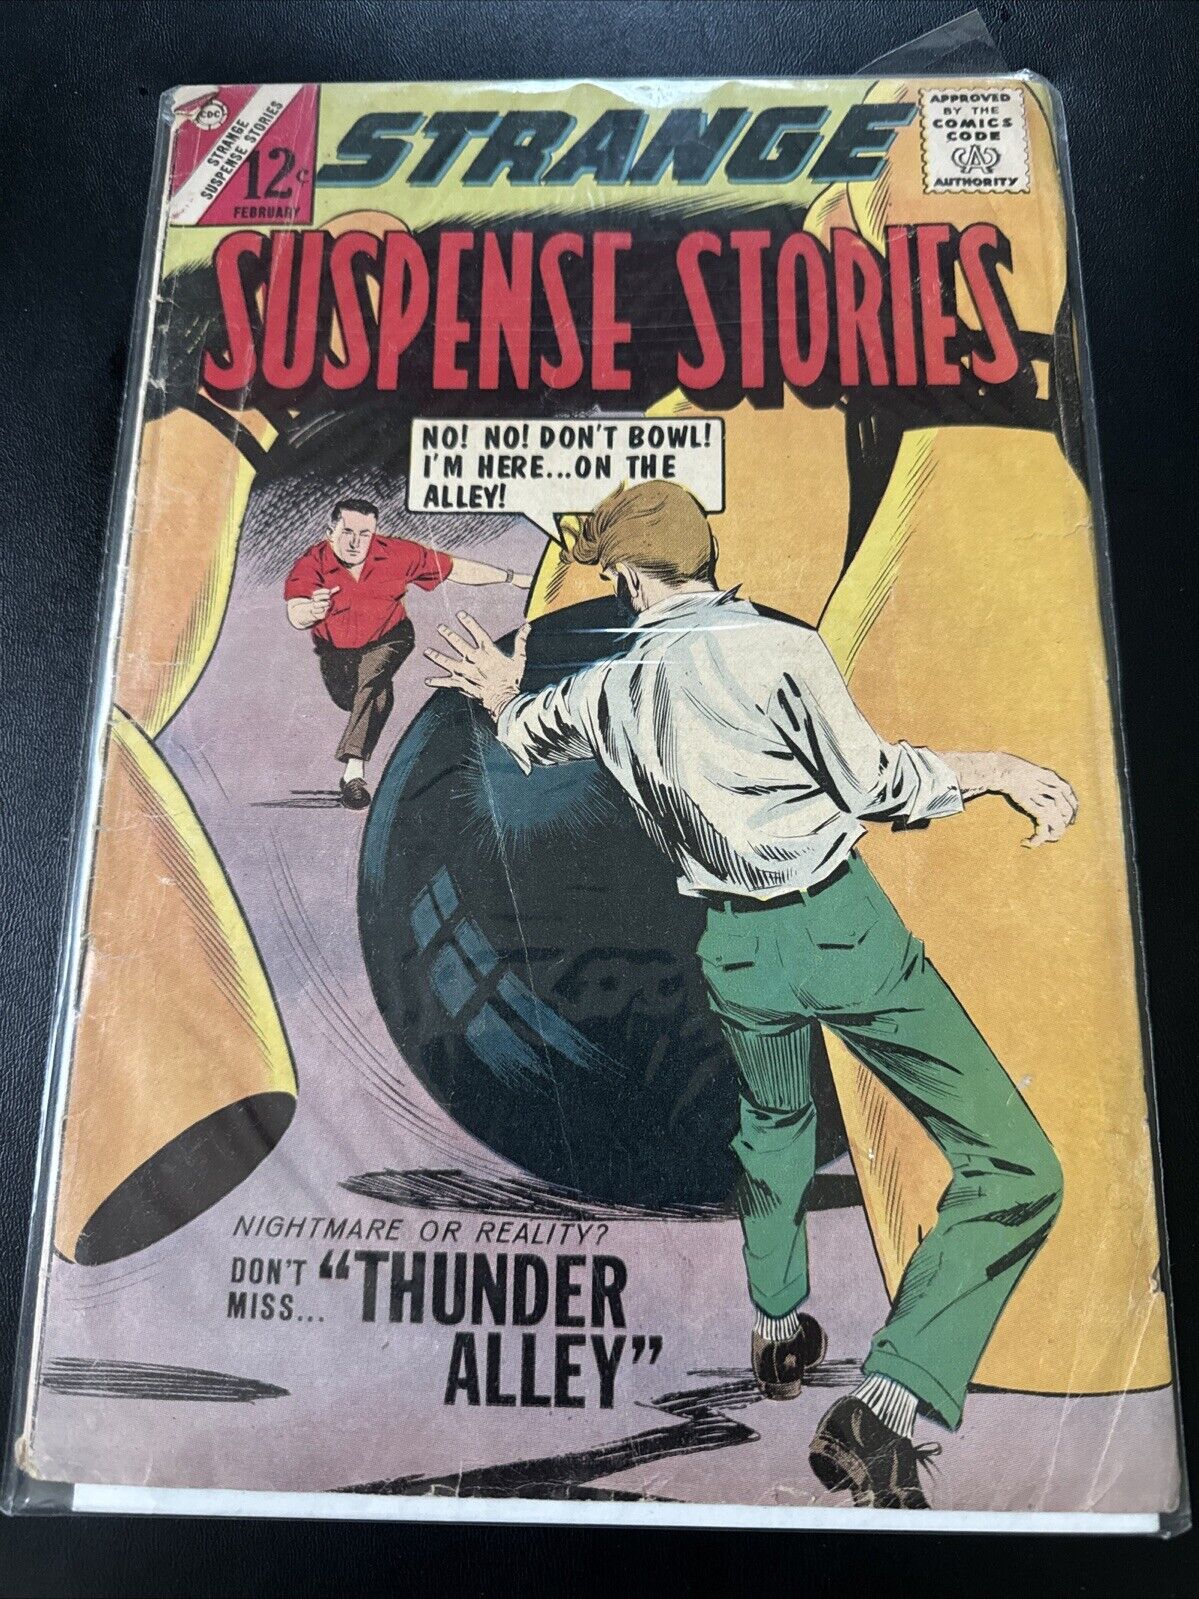 STRANGE SUSPENSE STORIES #69   THUNDER ALLEY  CHARLTON  SILVER-AGE  1964